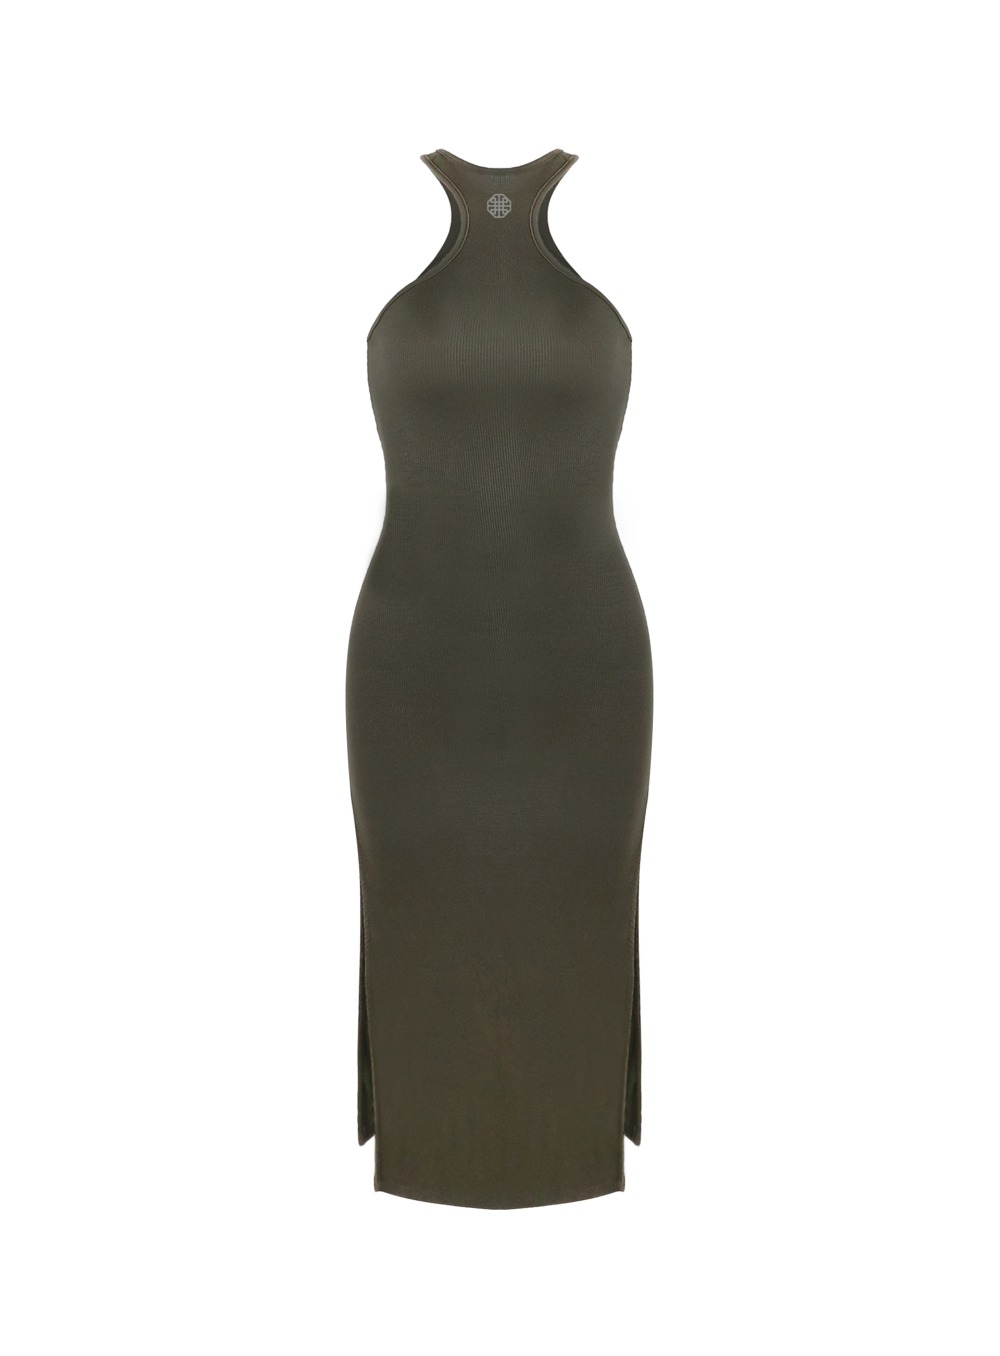 [ep1-drs22-002]Sleeveless Dress 1 - Darkolive